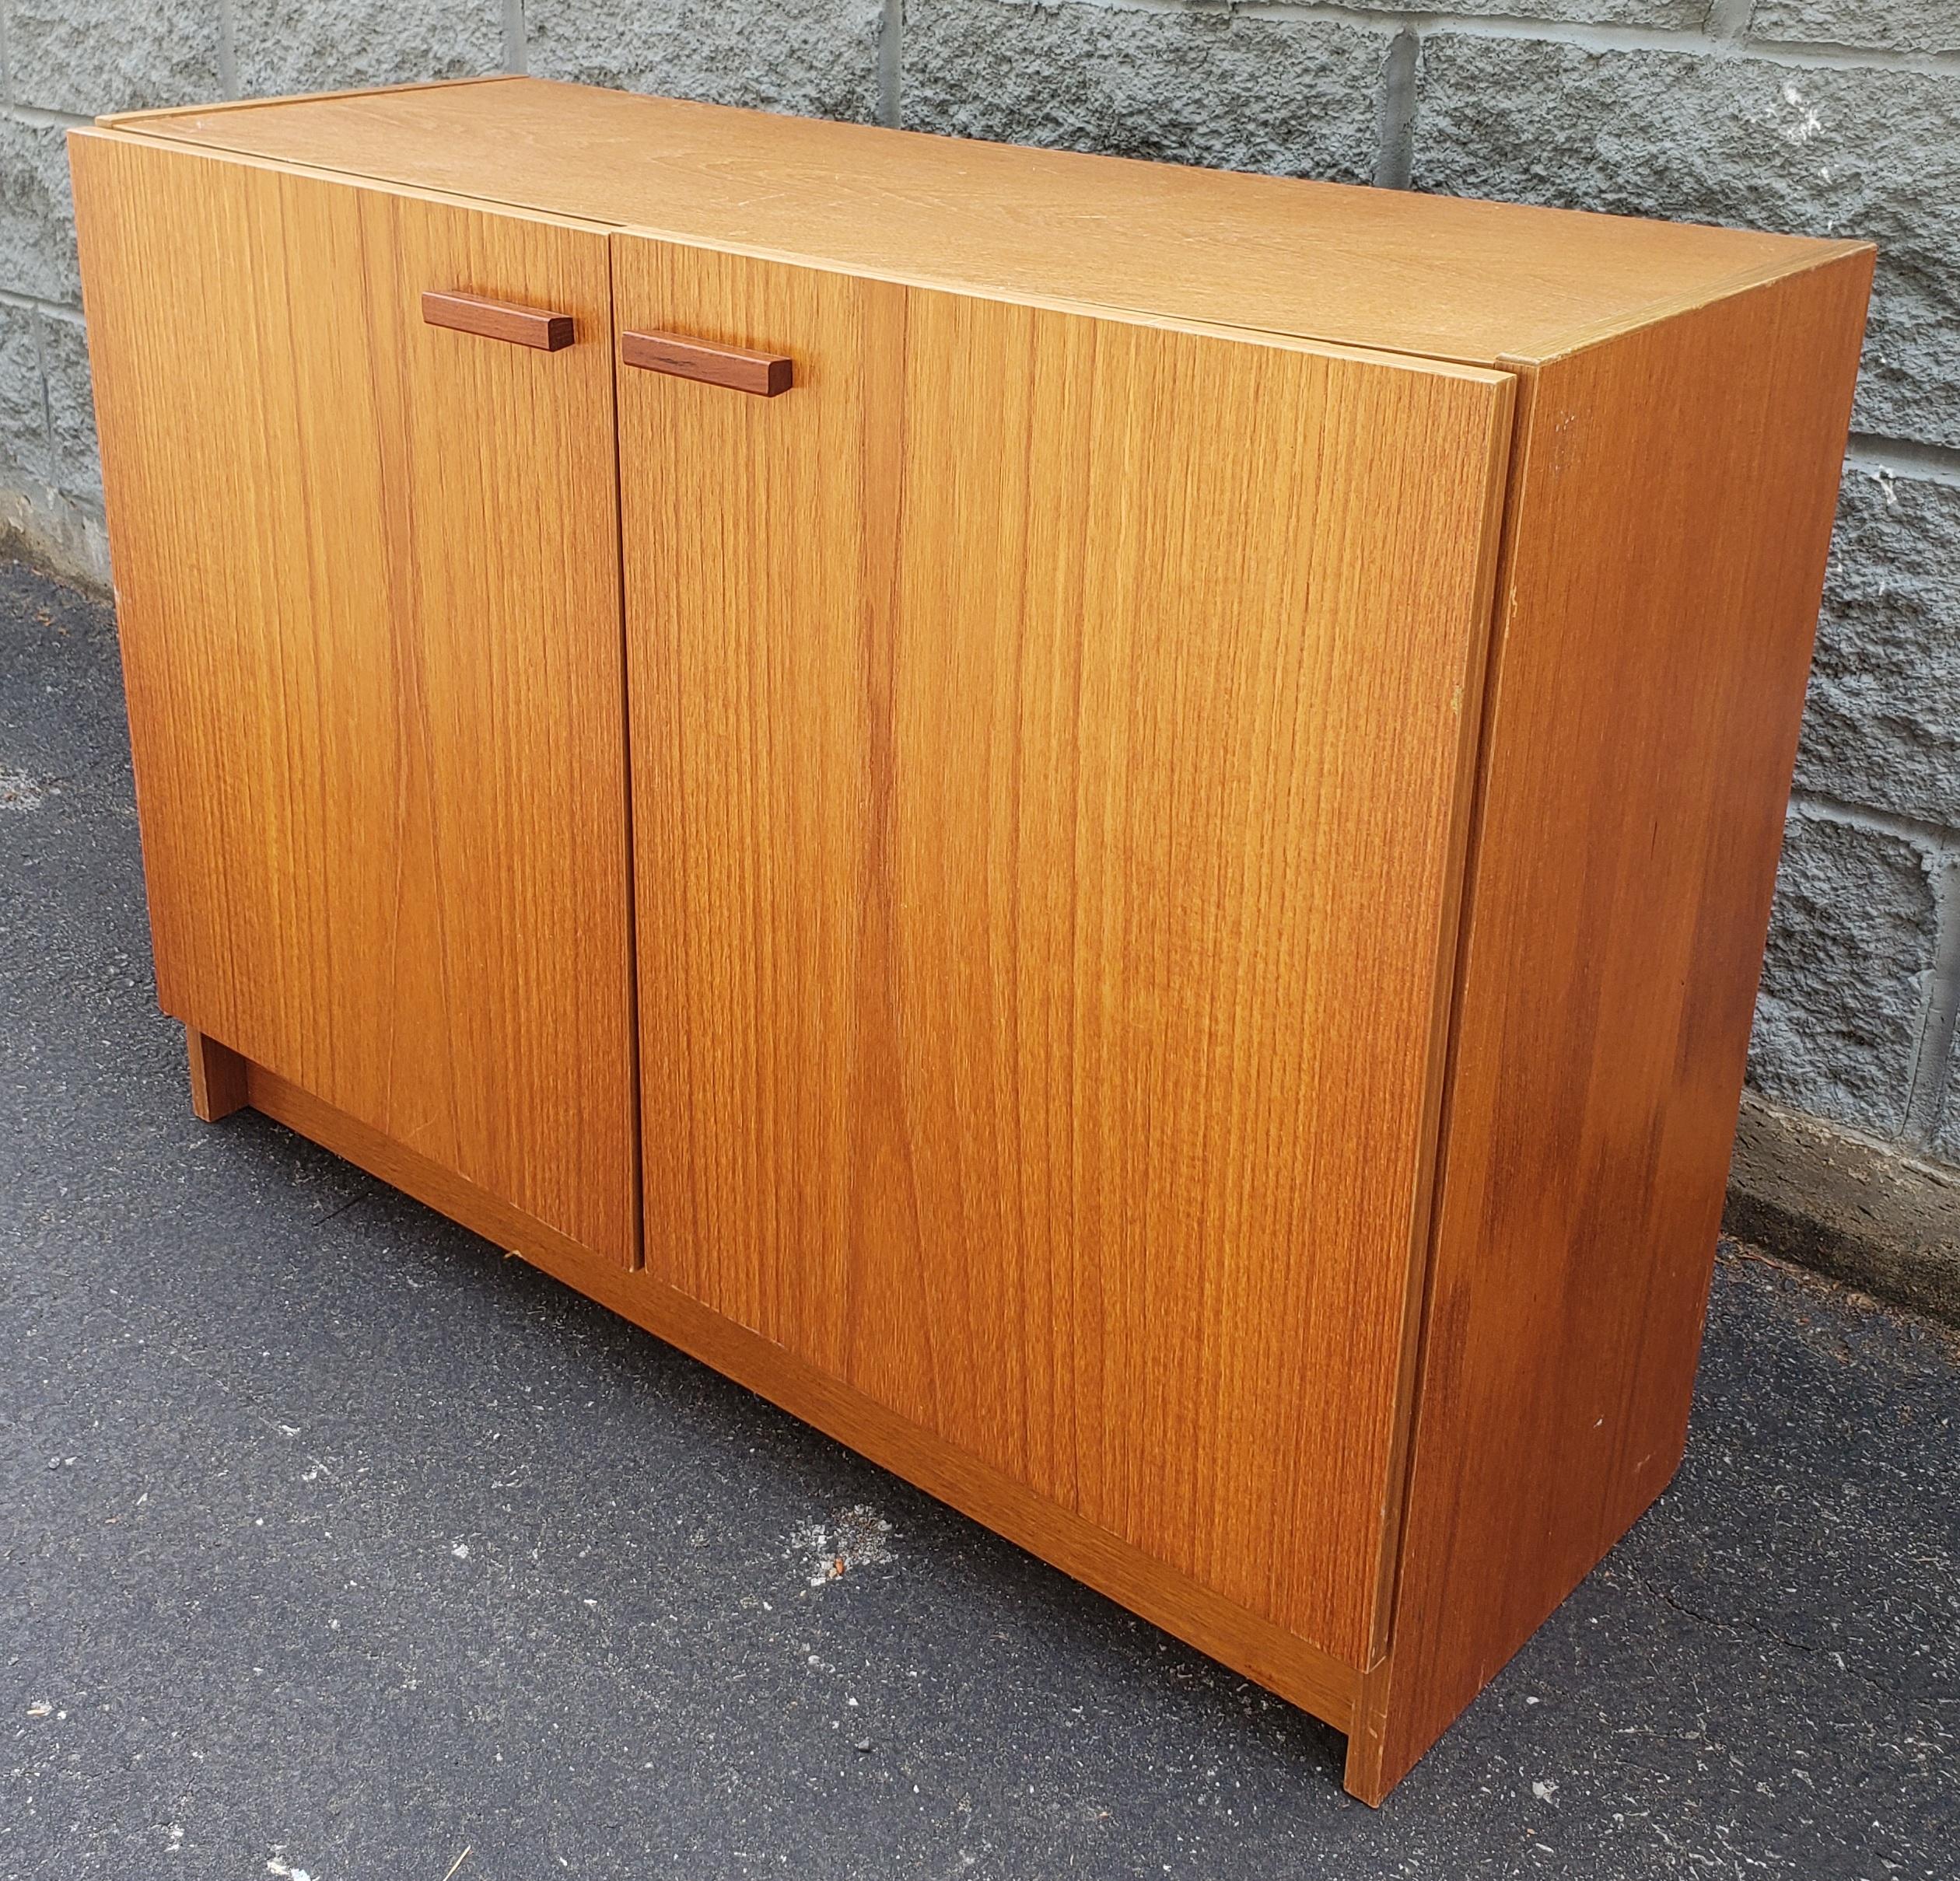 Midcentury Danish Modern Teak Storage Cabinet In Good Condition For Sale In Germantown, MD